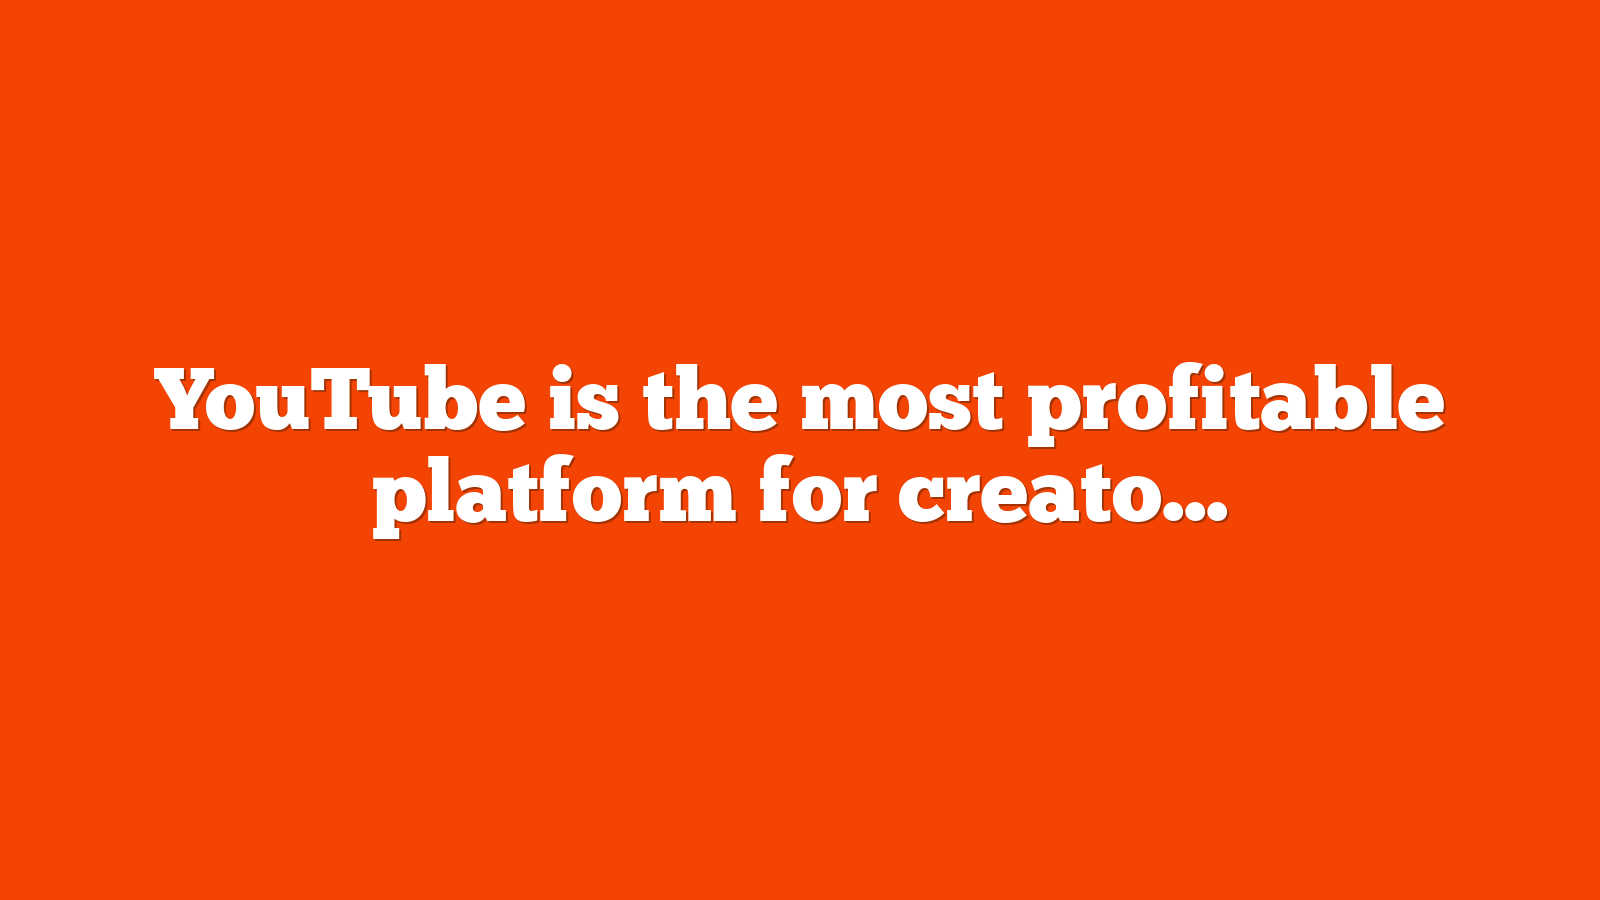 YouTube is the most profitable platform for creators, survey shows